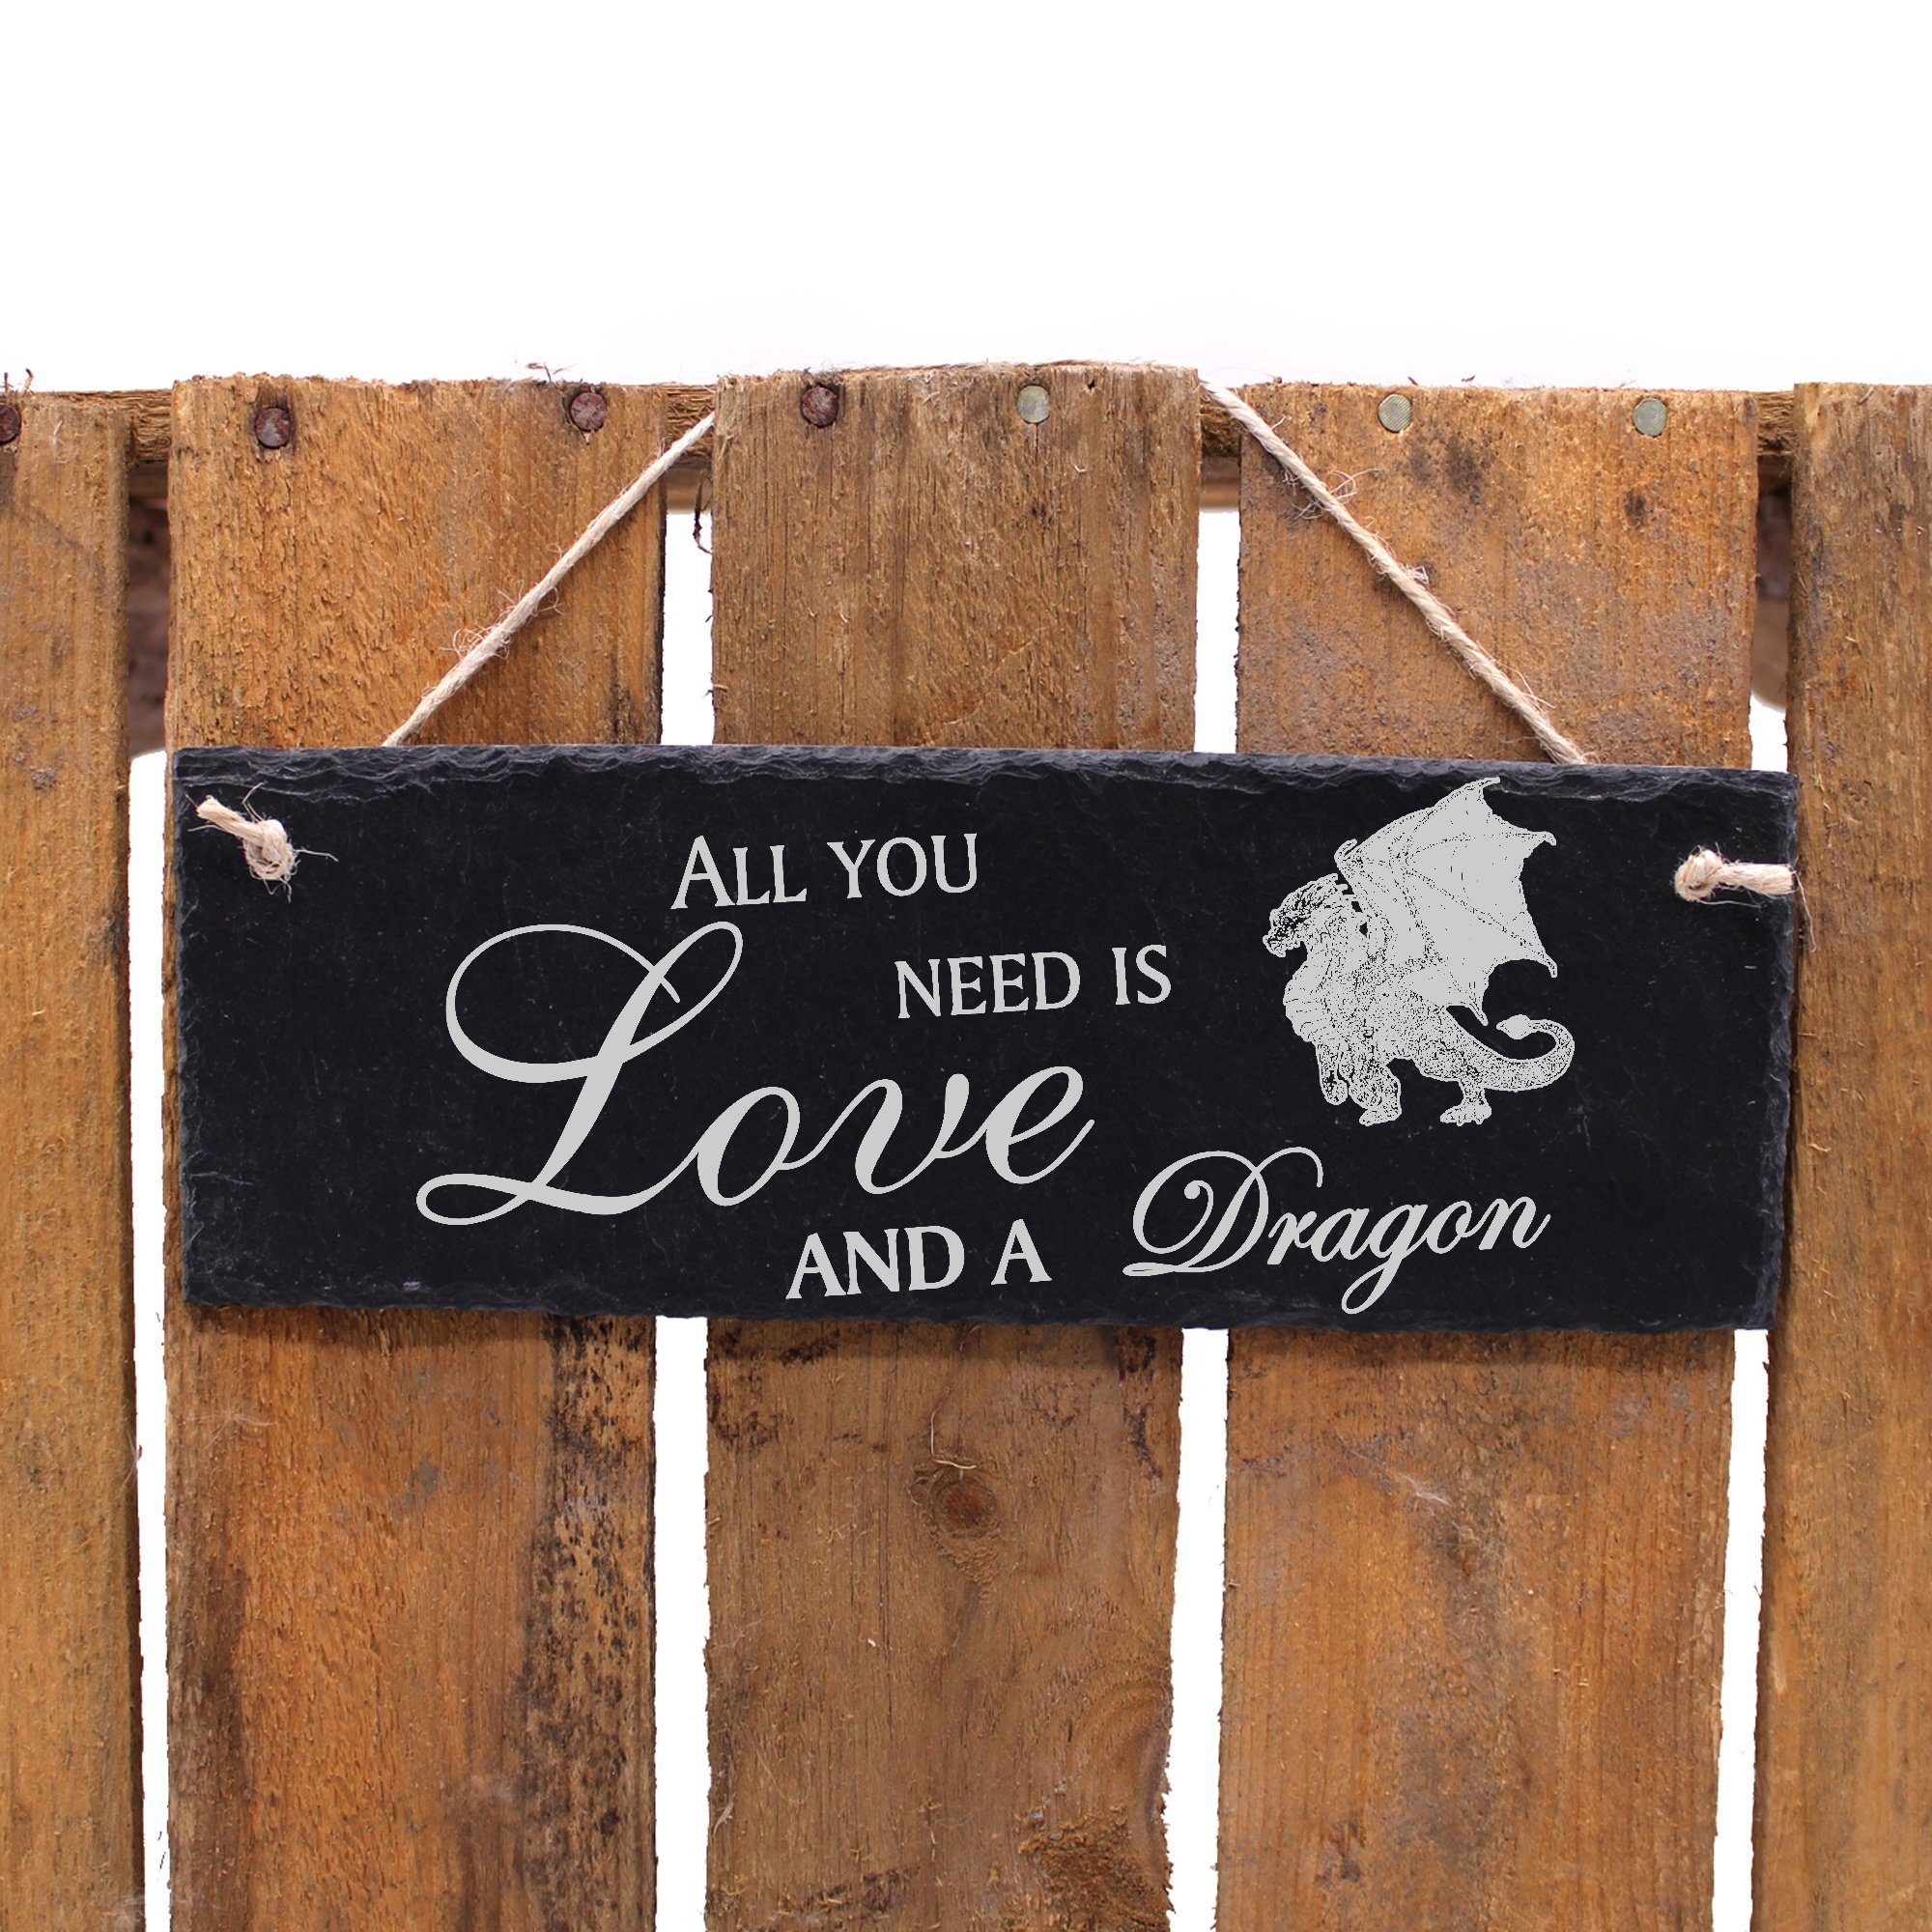 Dekolando Hängedekoration Dragon and a you need All Drache Love is 22x8cm